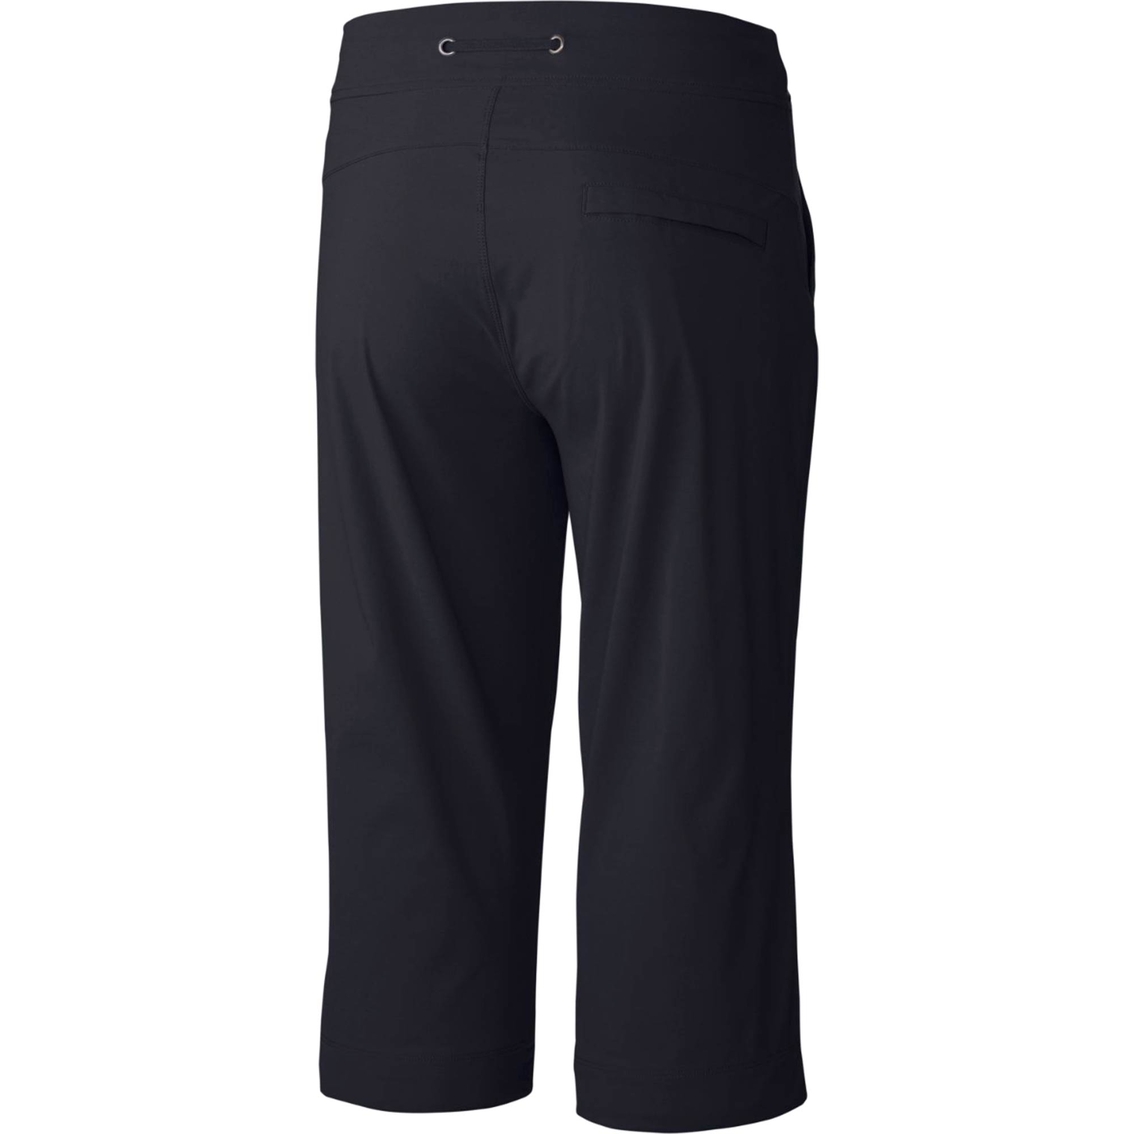 Columbia Plus Size Anytime Outdoor Capri Pants | Pants | Clothing ...